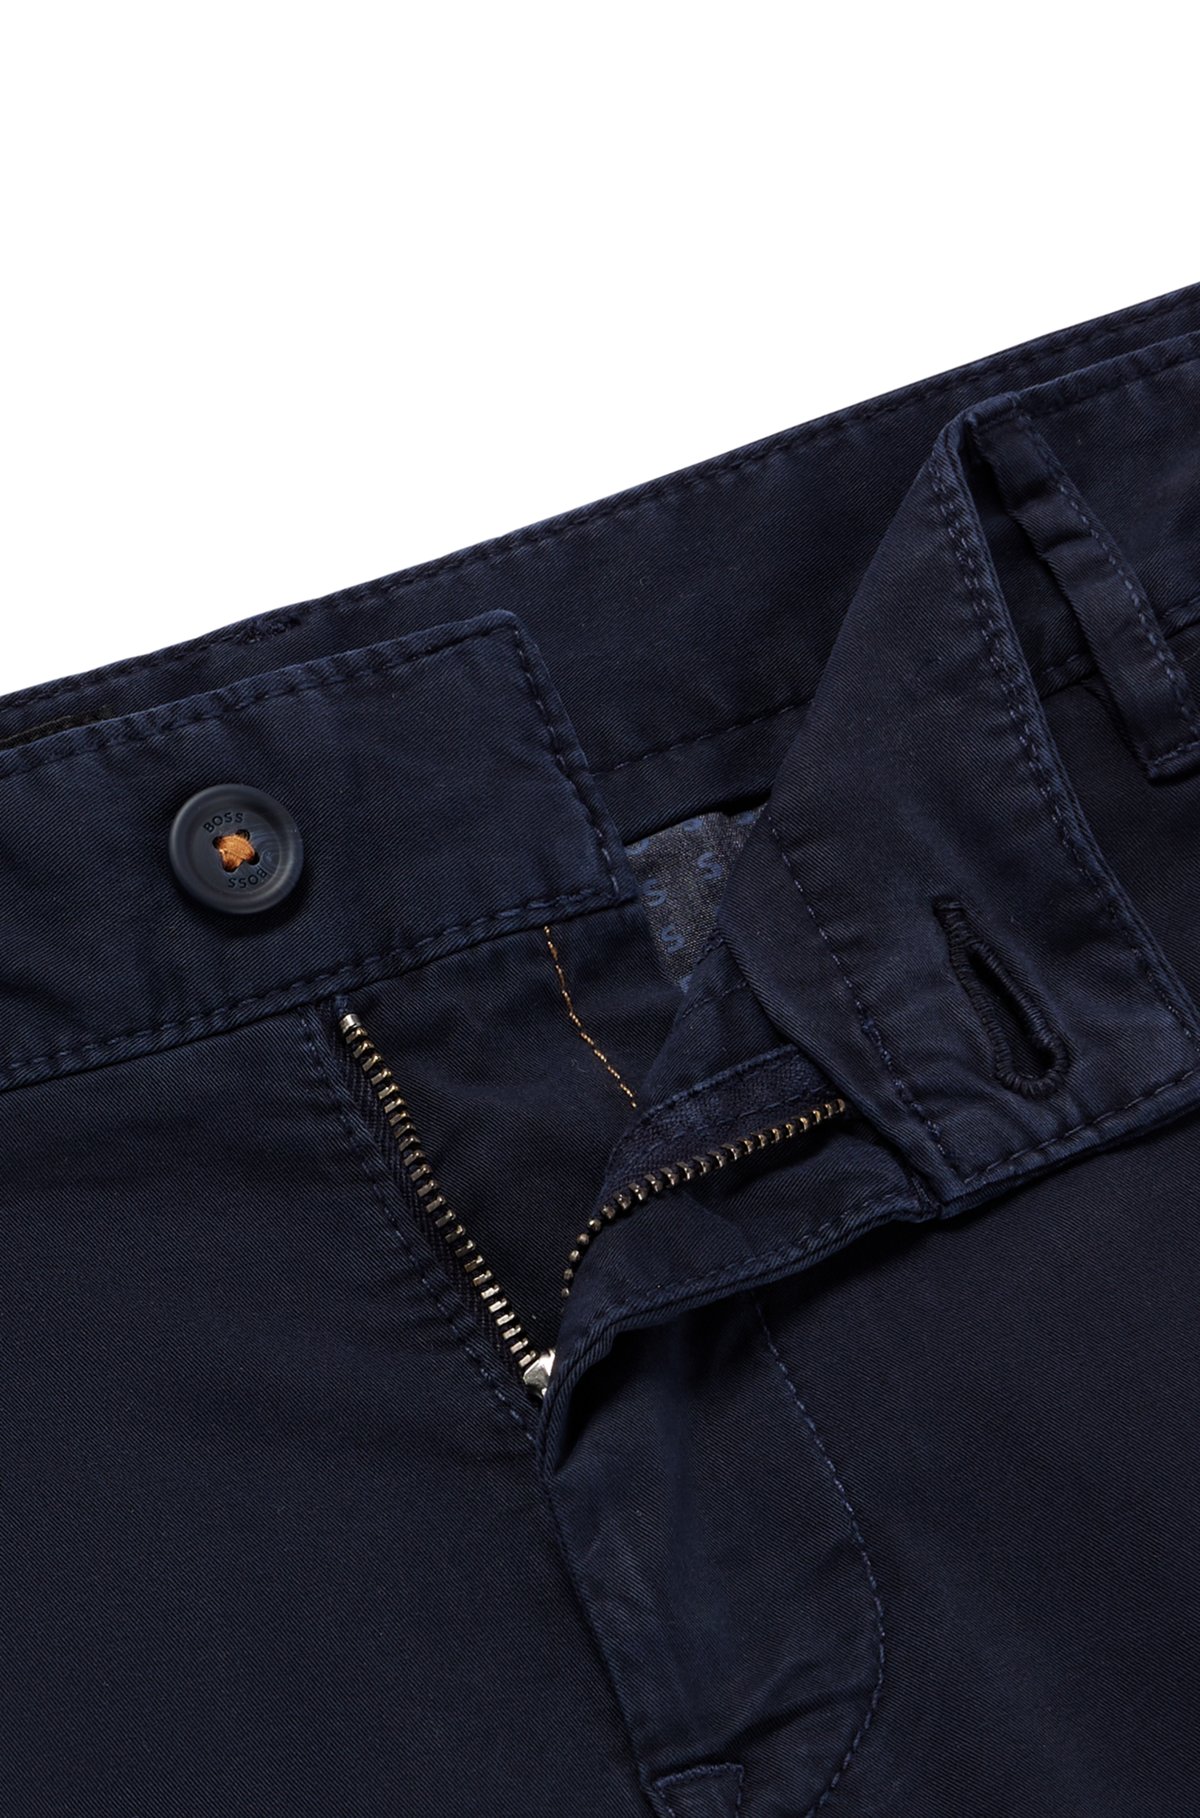 Shorts slim fit de tiro medio en algodón elástico, Azul oscuro